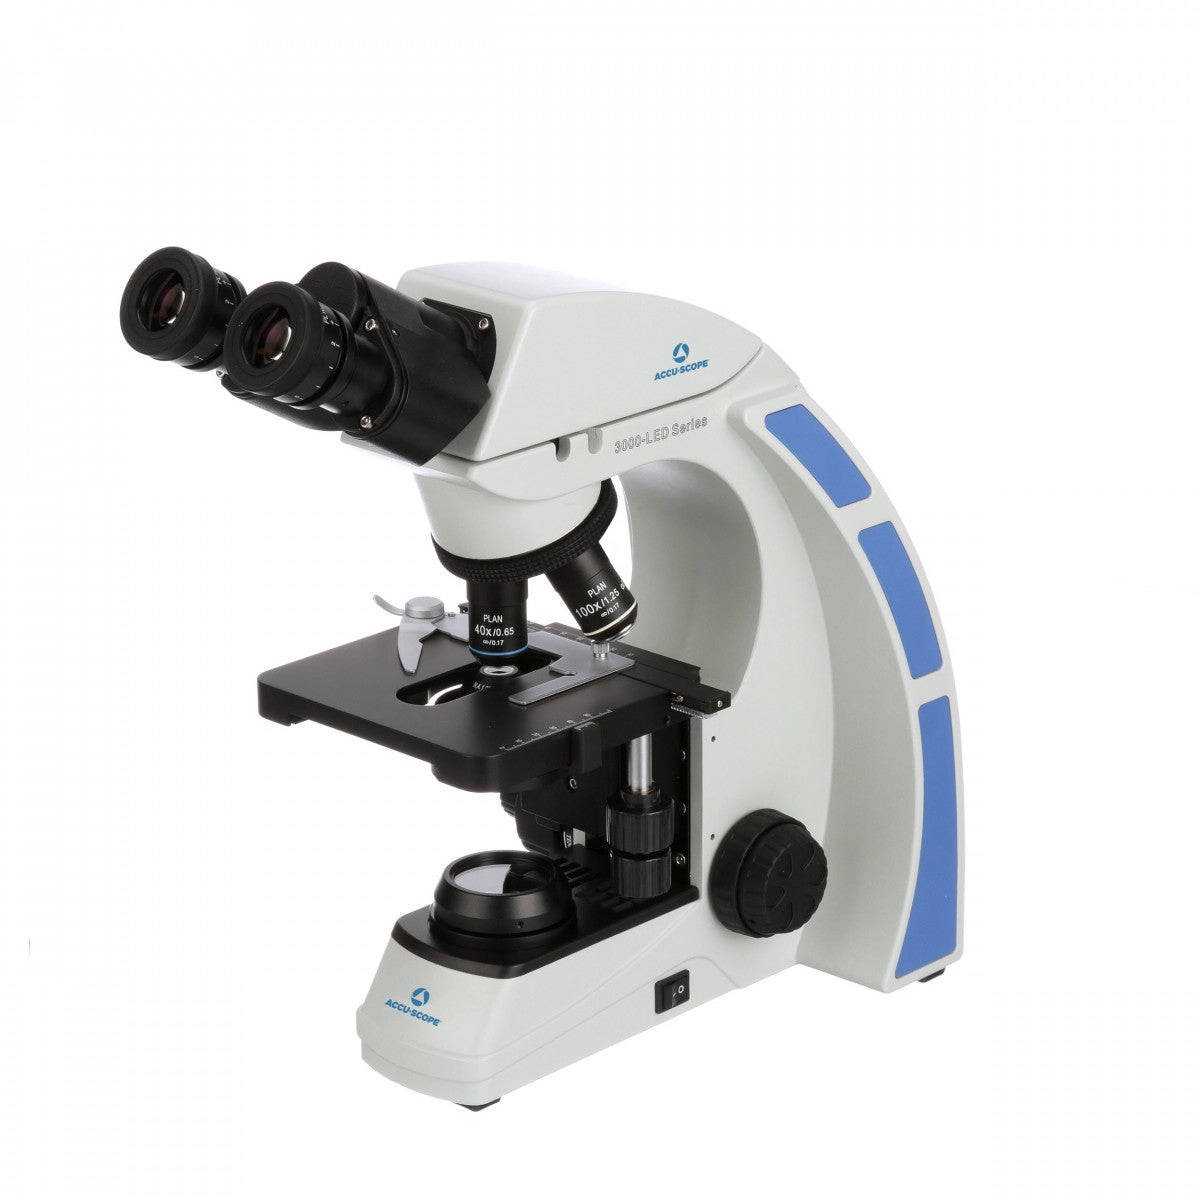 Accu-Scope 3000-LED Series Microscope with 4X, 10x, 40x, 100x Oil Infinity Plan Achromat Objectives